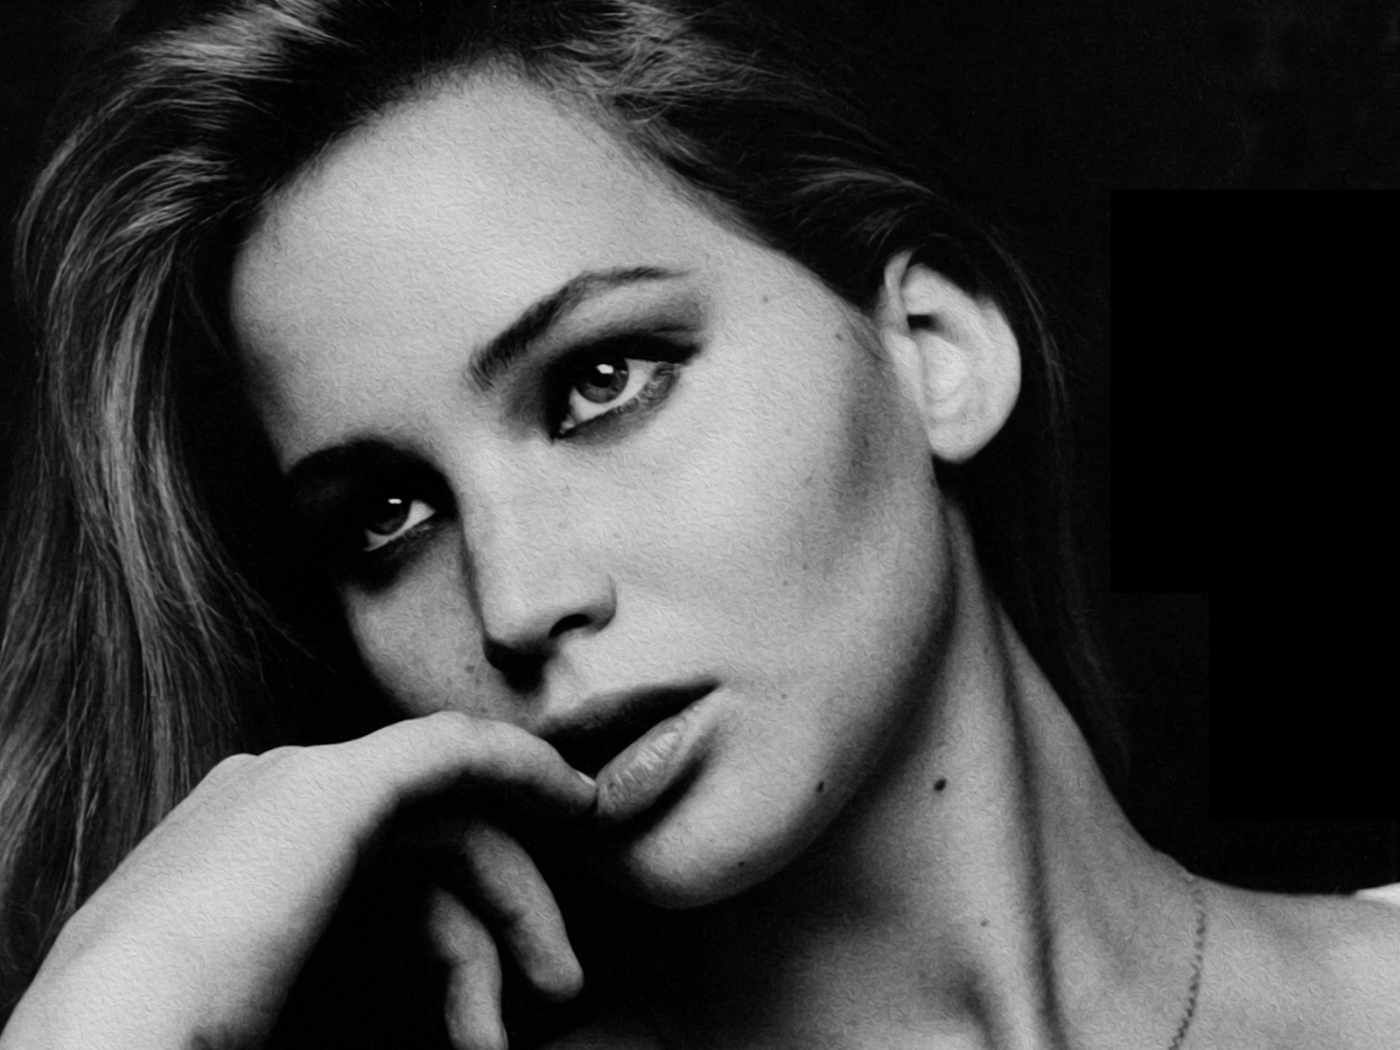 Supermodel Jennifer Lawrence